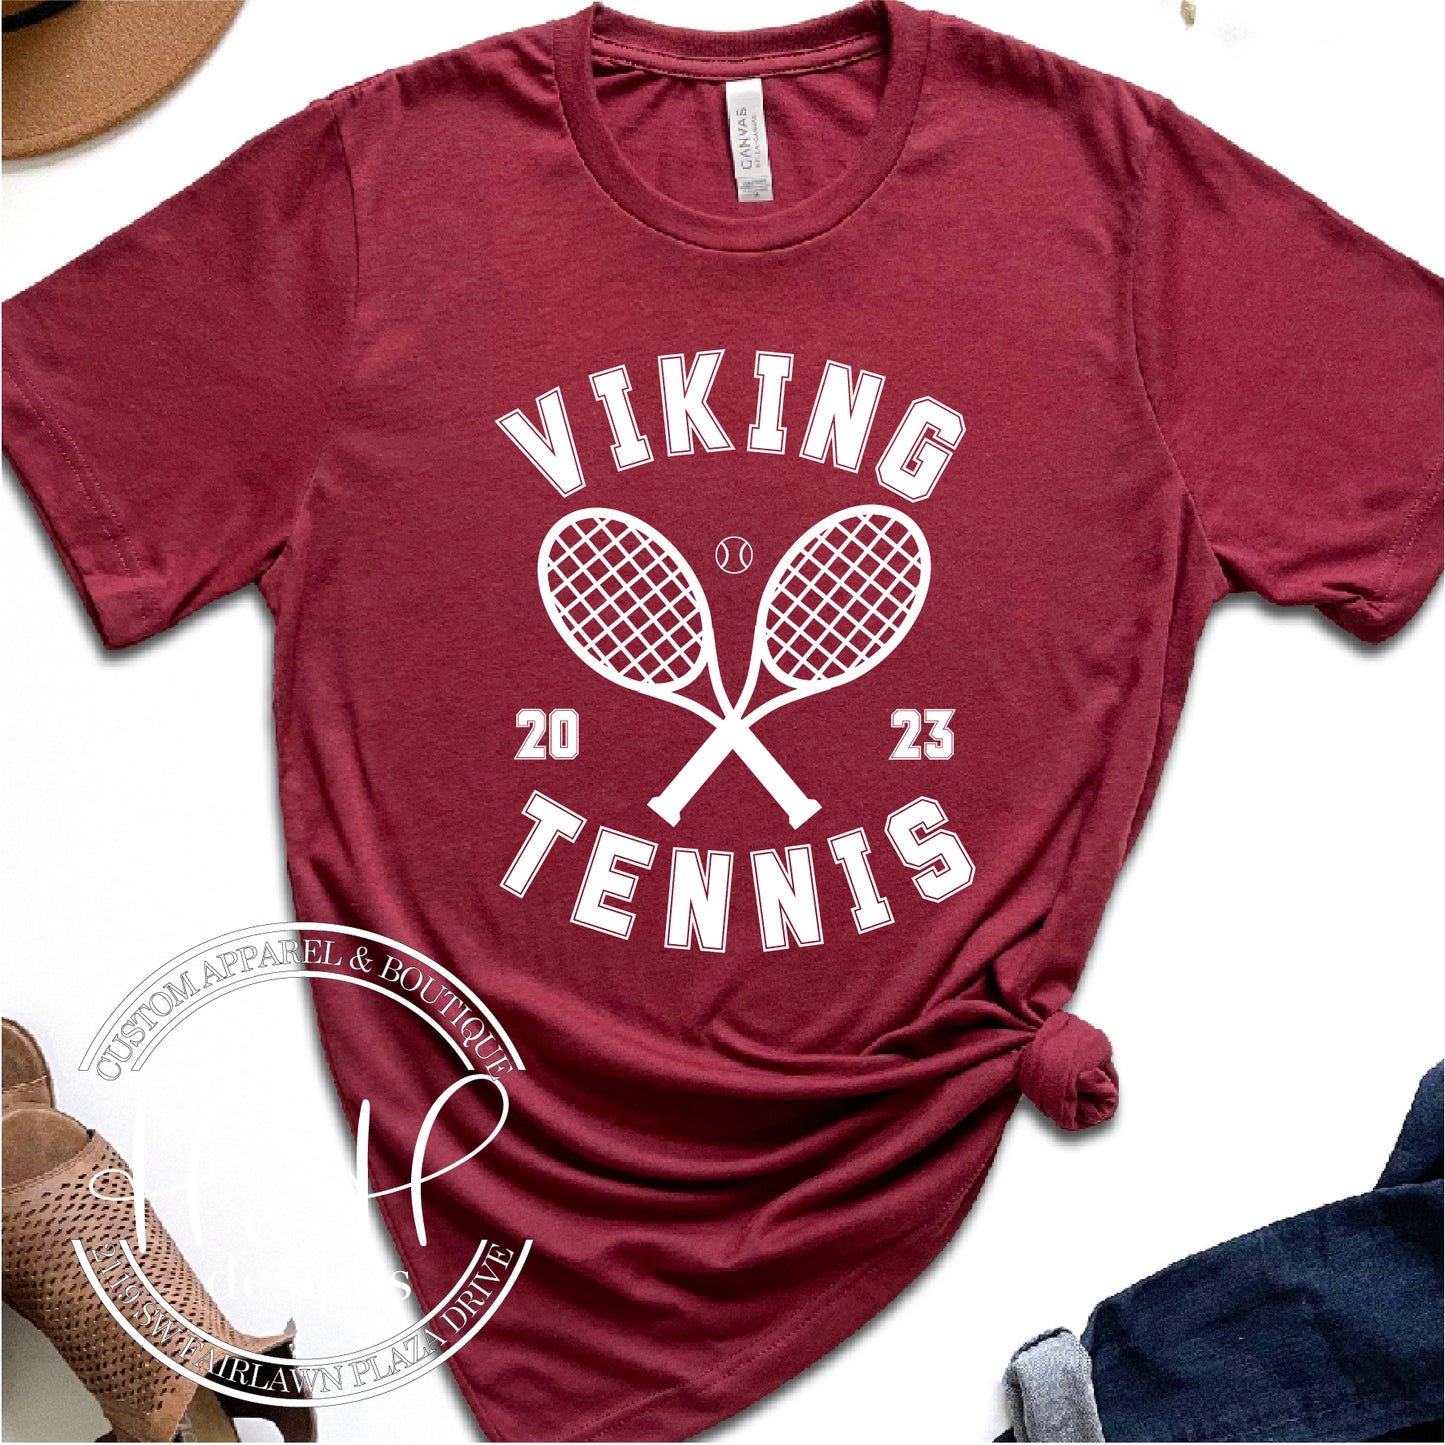 Vikings Tennis Crossed Rackets -  Lady Vikes Tennis